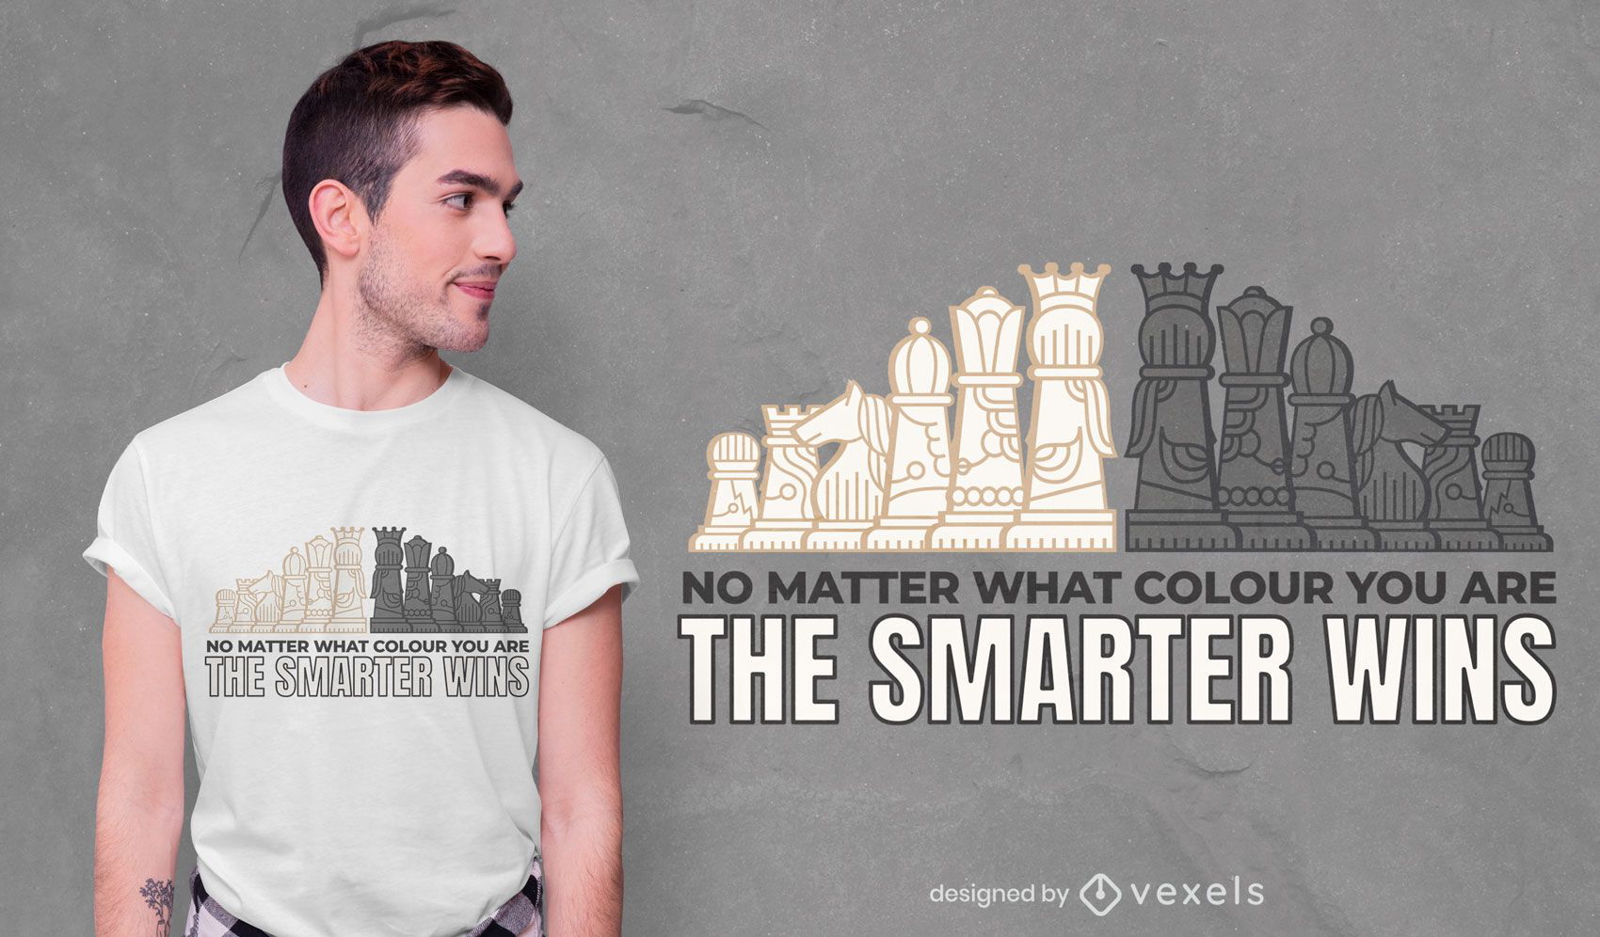 Dise?o de camiseta inteligente de ajedrez.